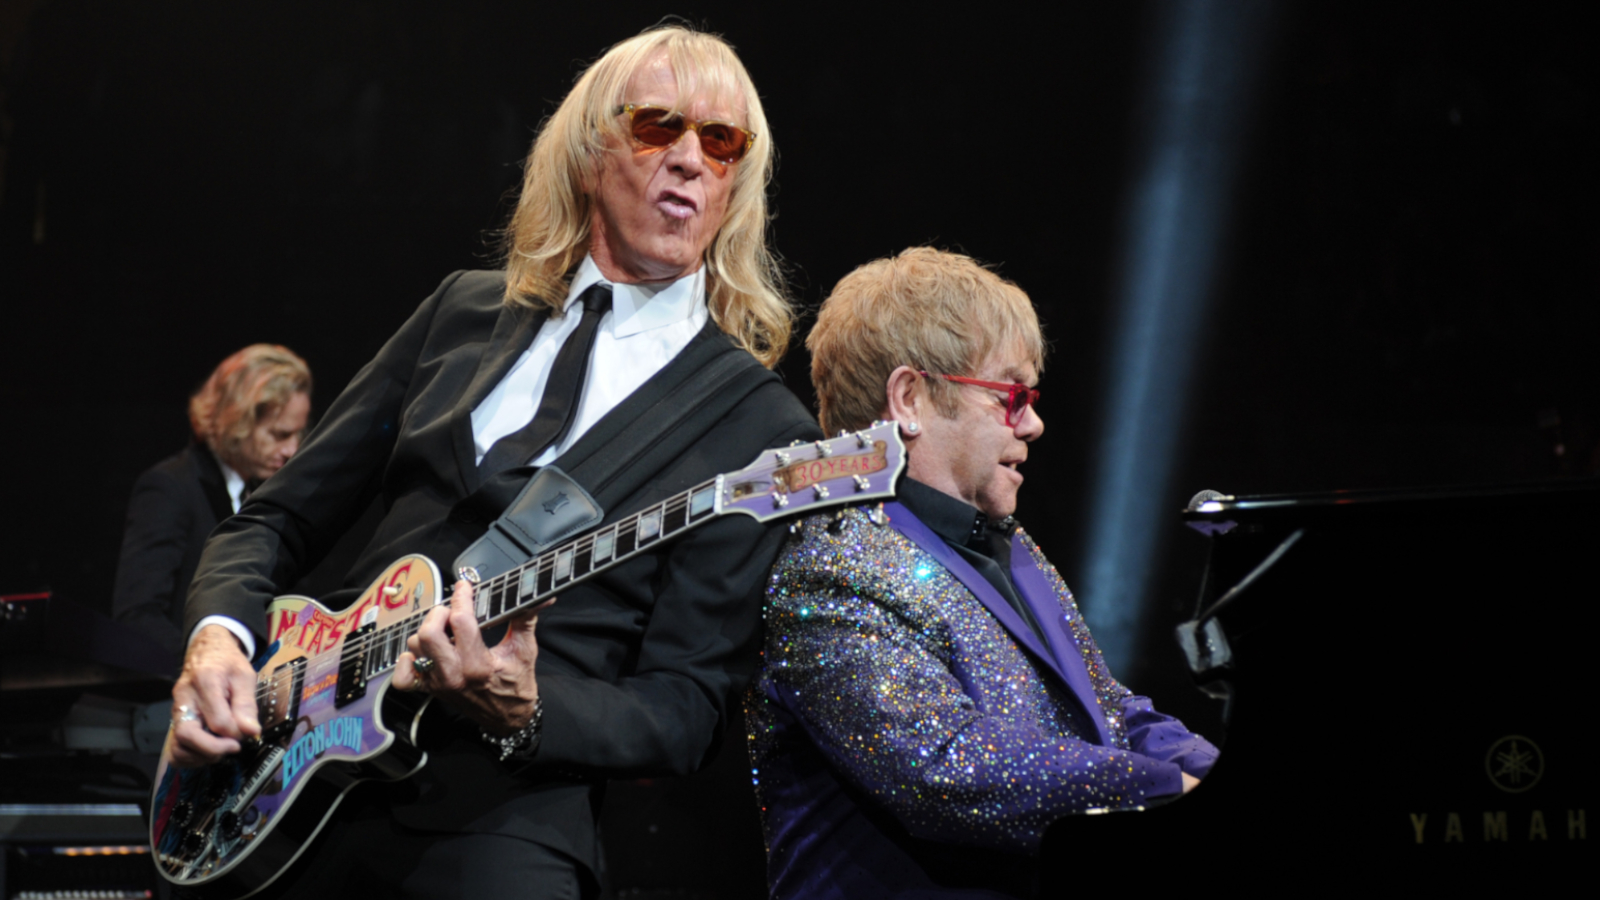 I've Had an Amazing, Unbelievable Career”: Elton John Guitarist